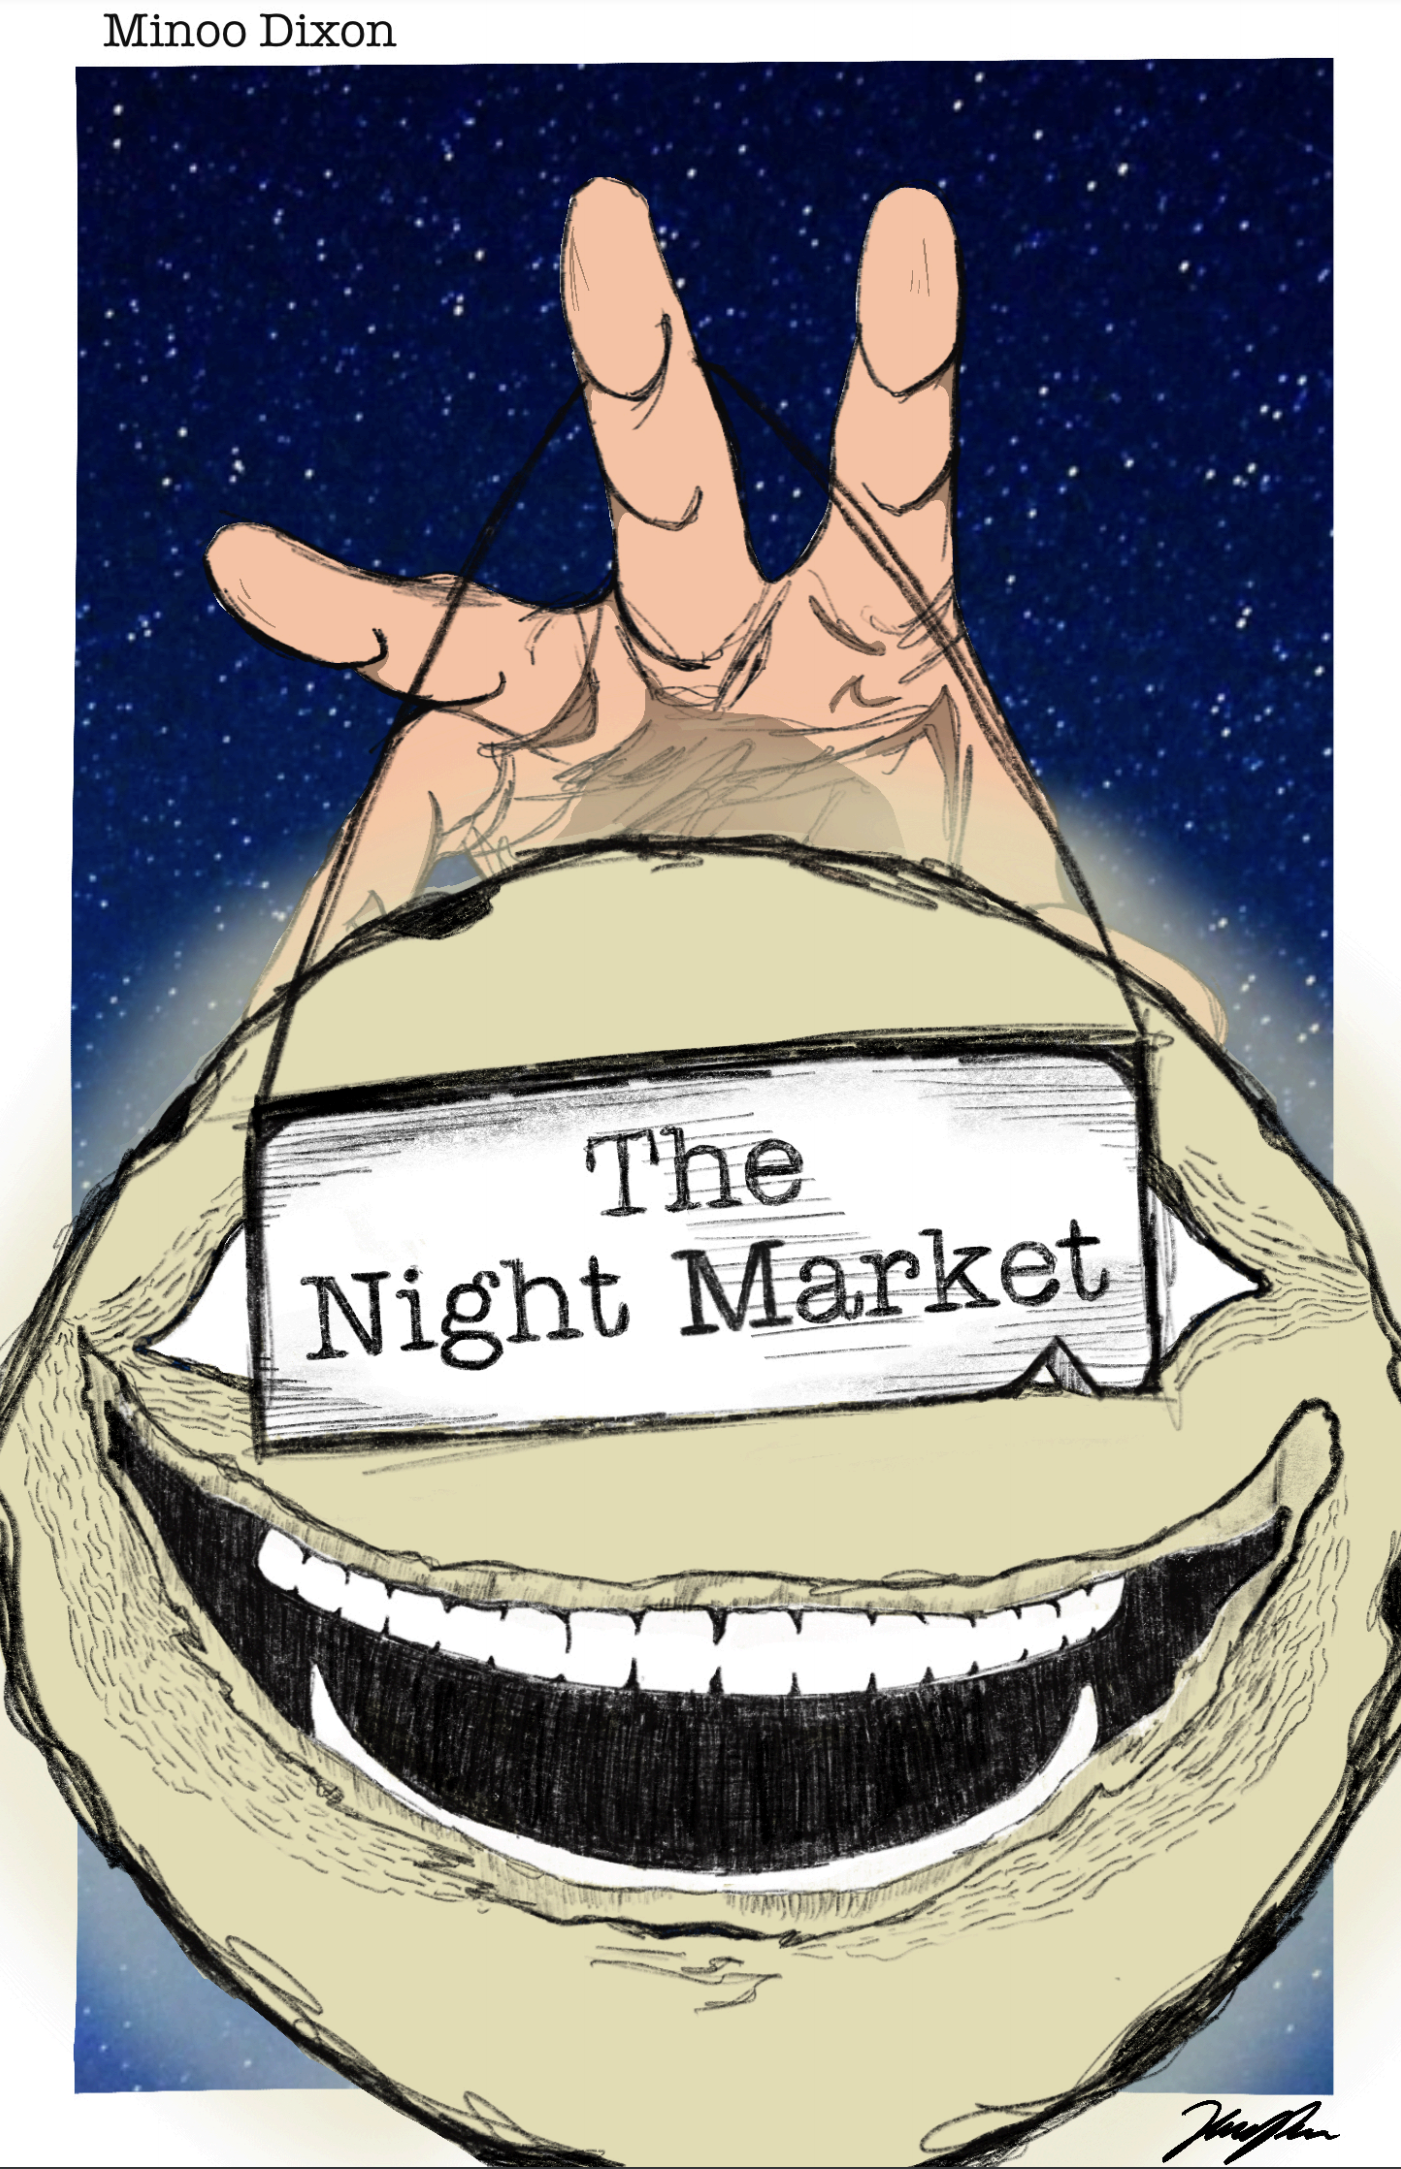 The Night Market (Score Only) by Minoo Dixon